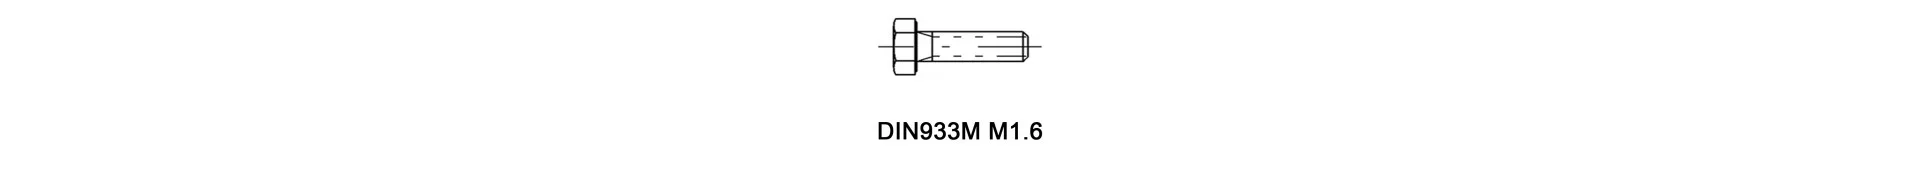 DIN933M M1.6